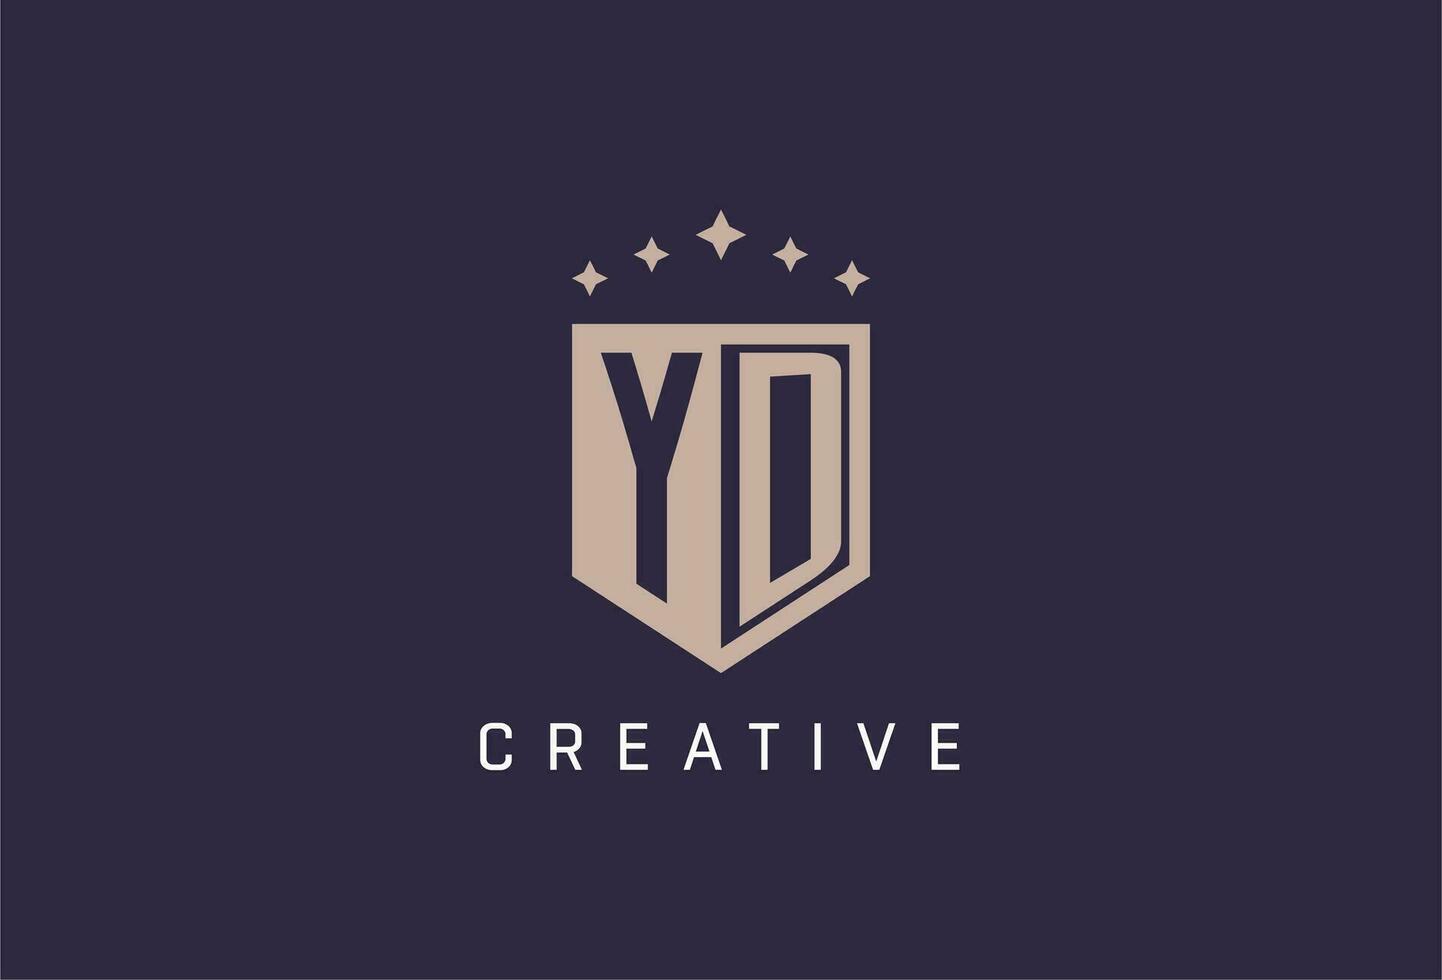 YD initial shield logo icon geometric style design vector